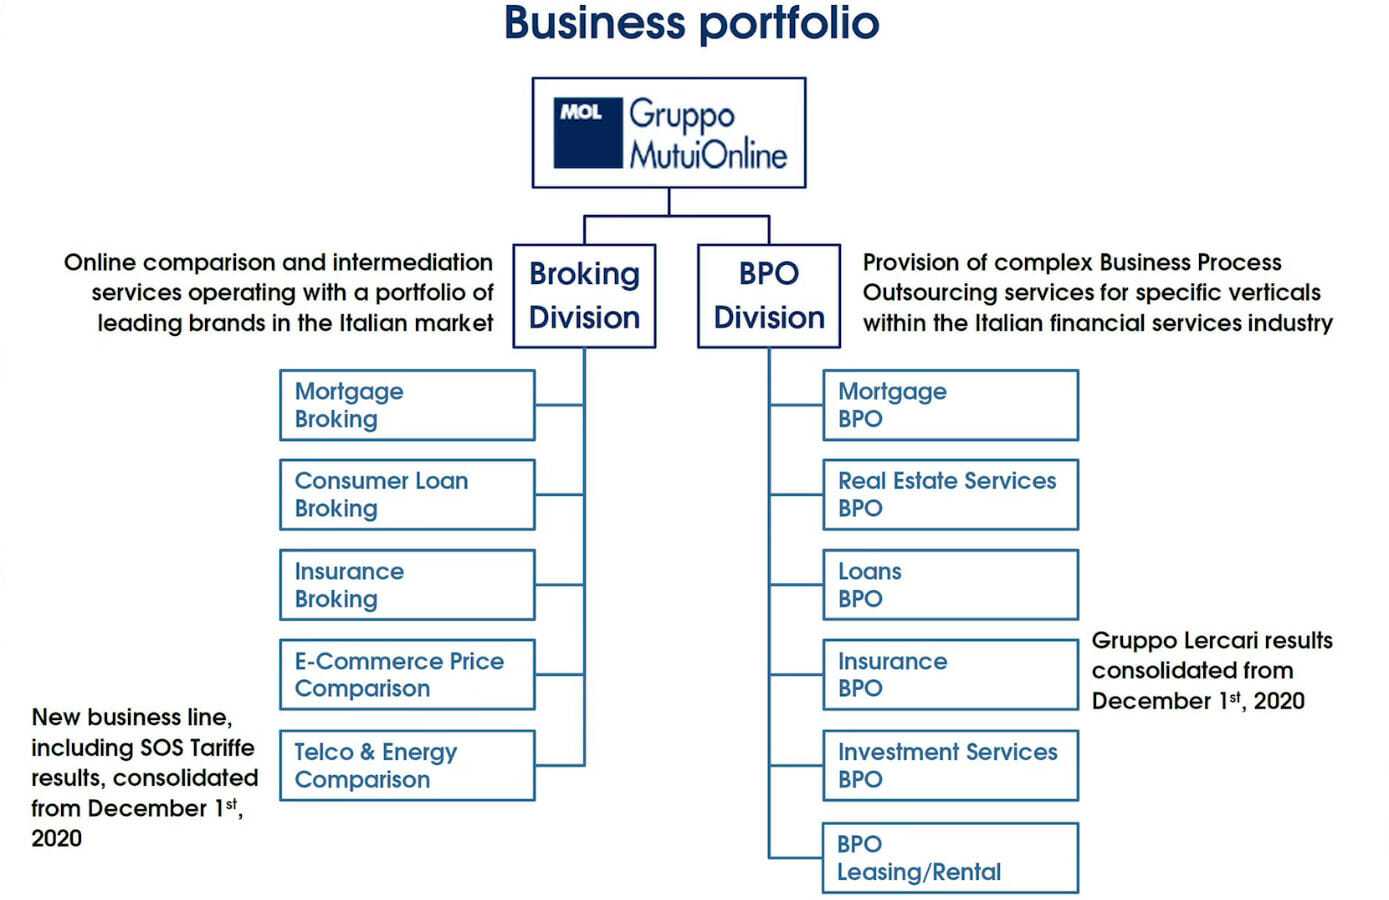 The business portfolio - Marco Pescarmona (Gruppo Mutui Online)